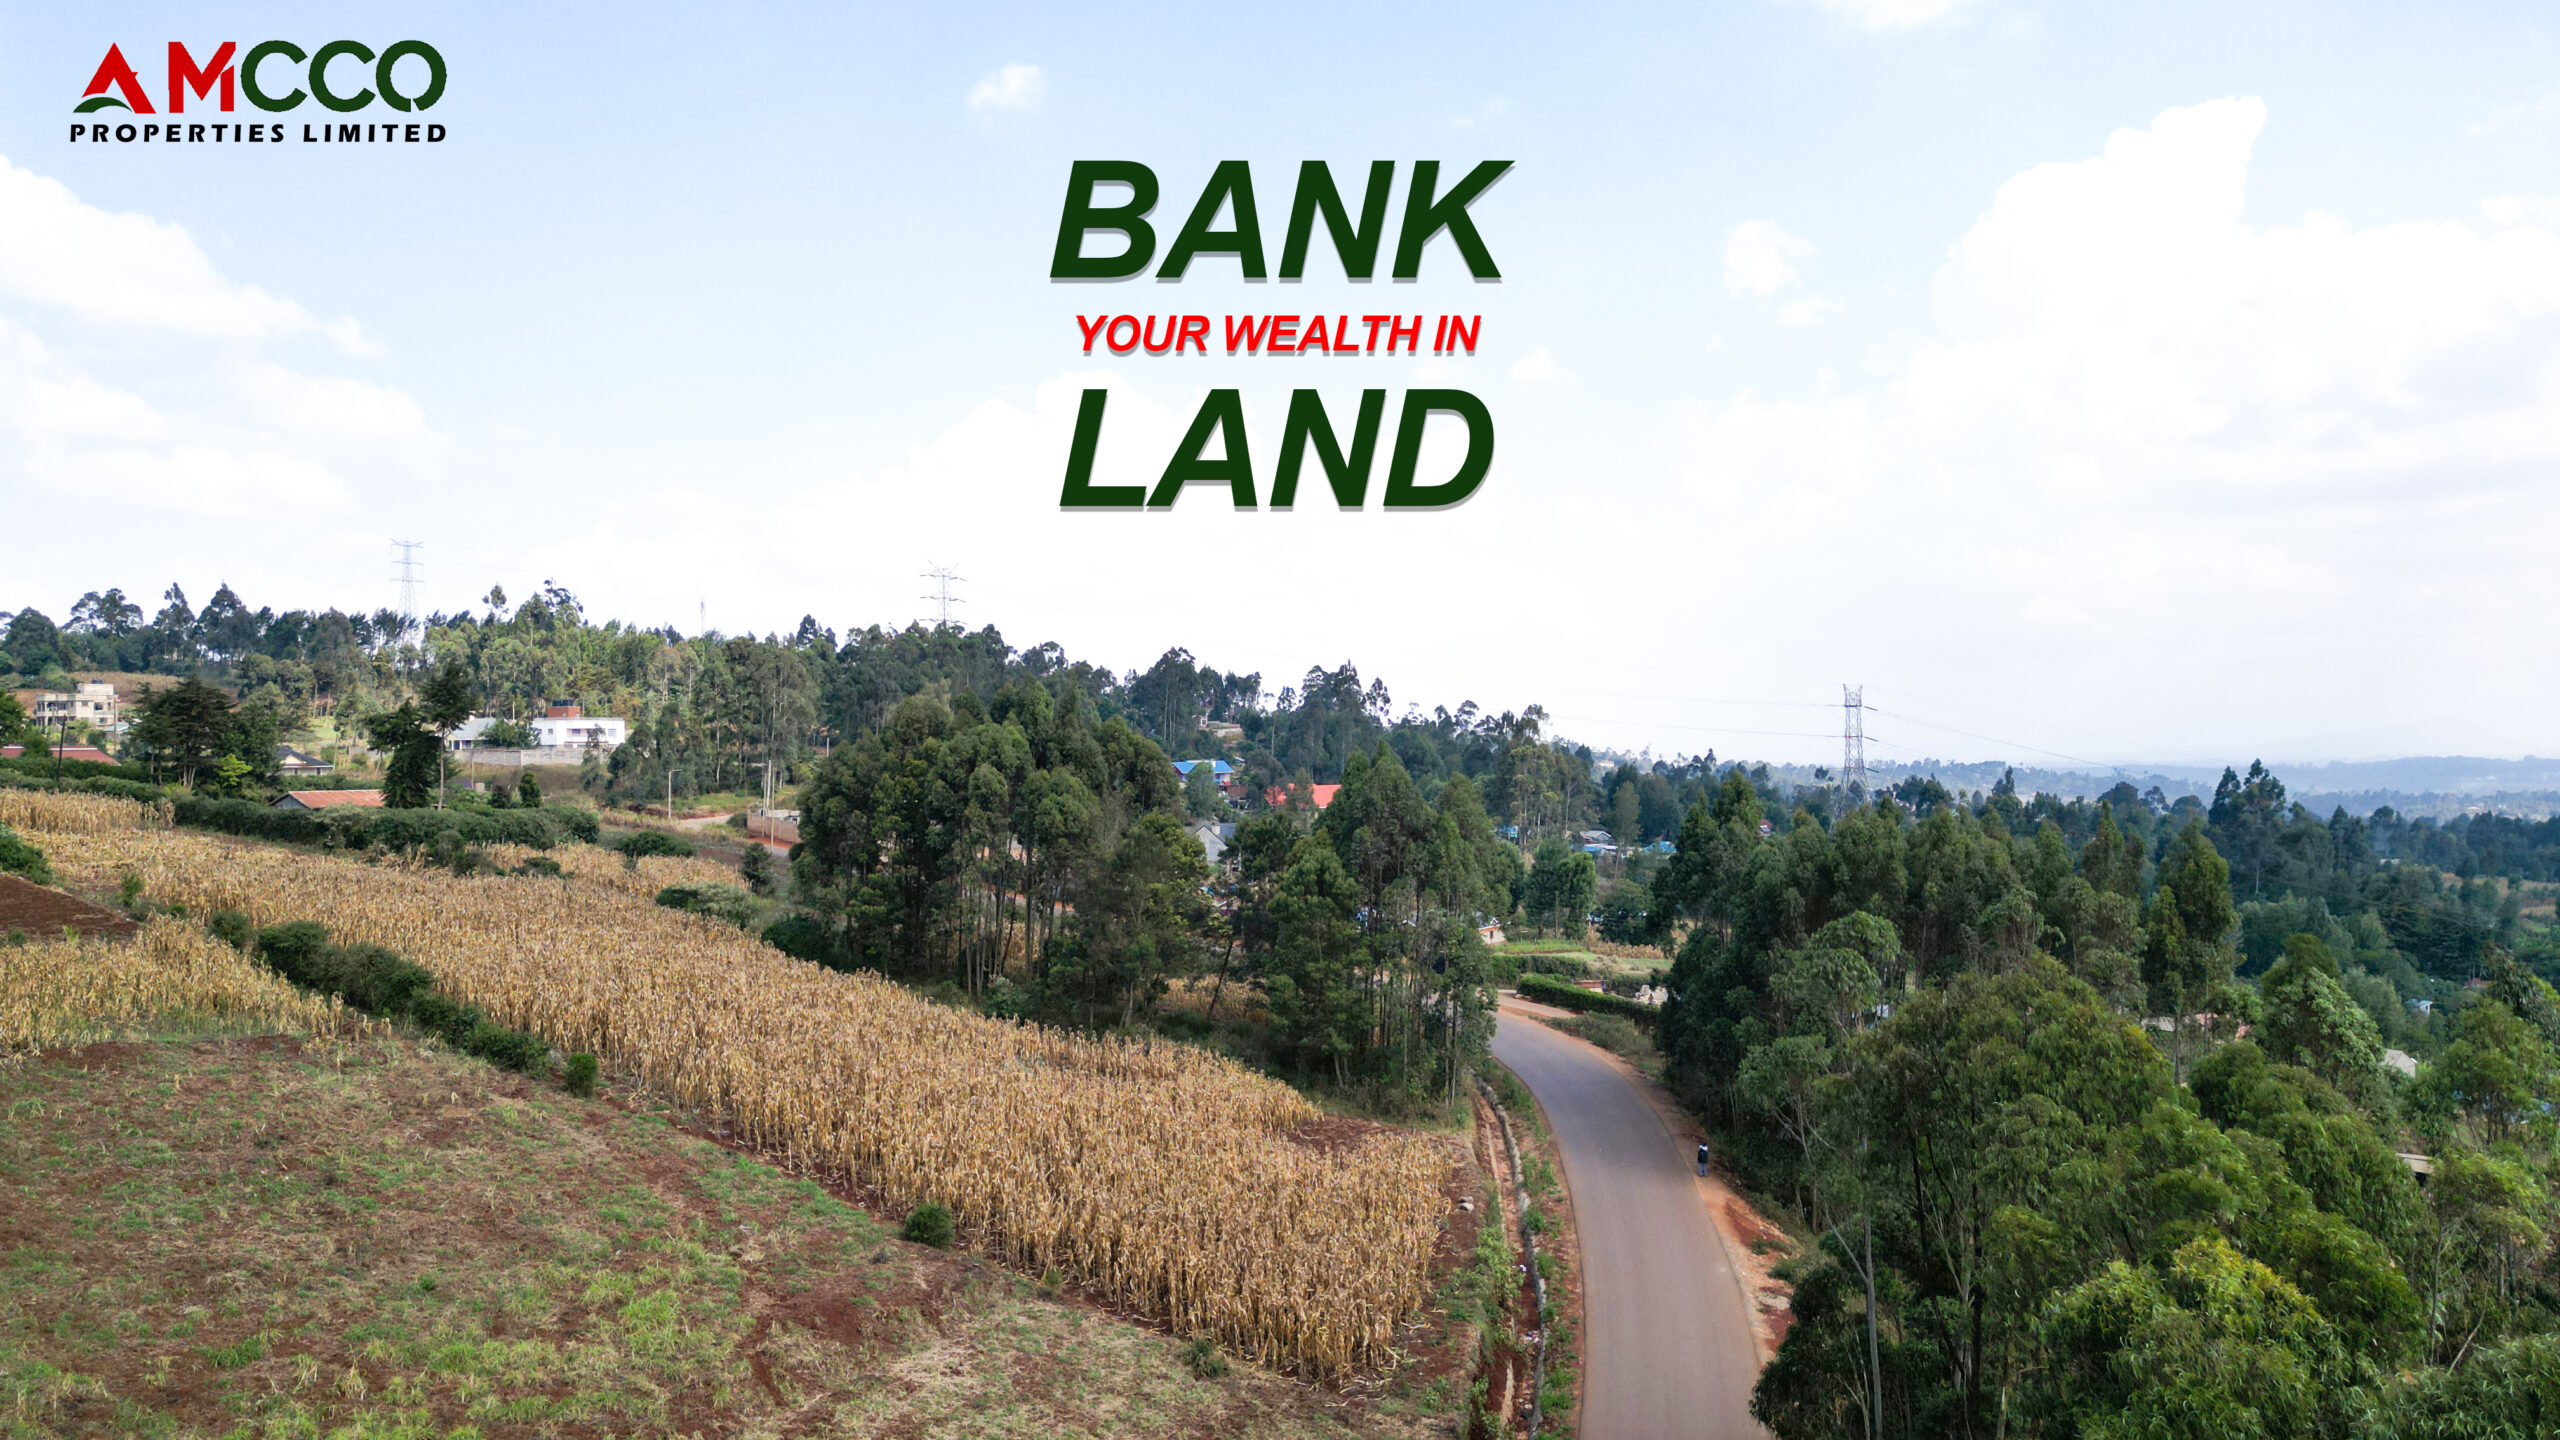 6 Reasons You Should Start Land Banking